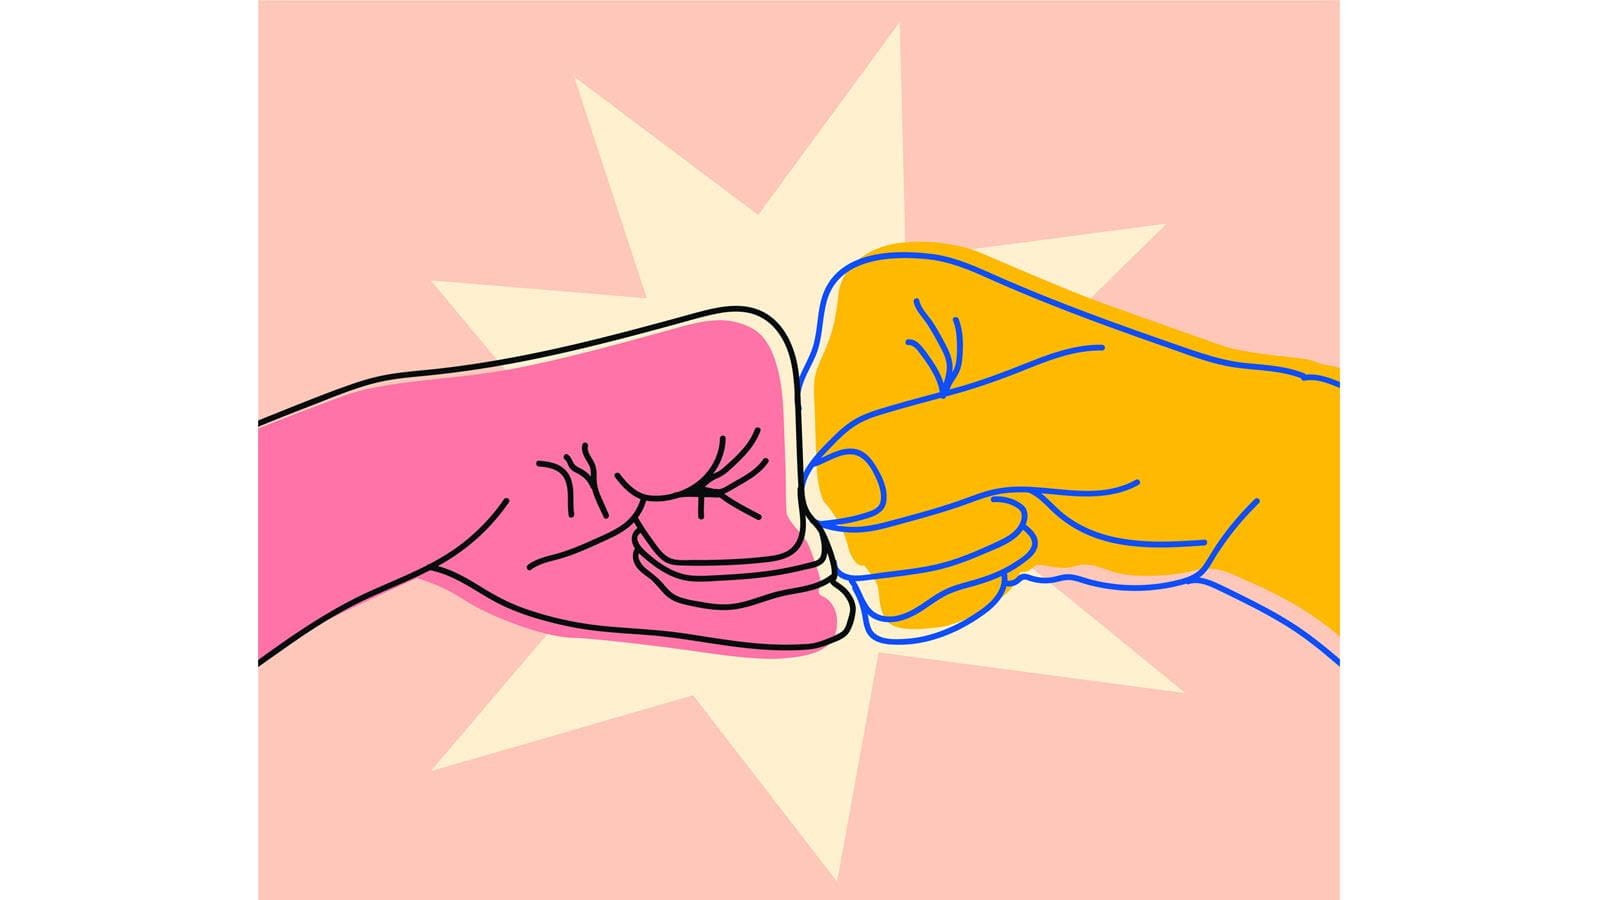 pink illustration of a fist bump